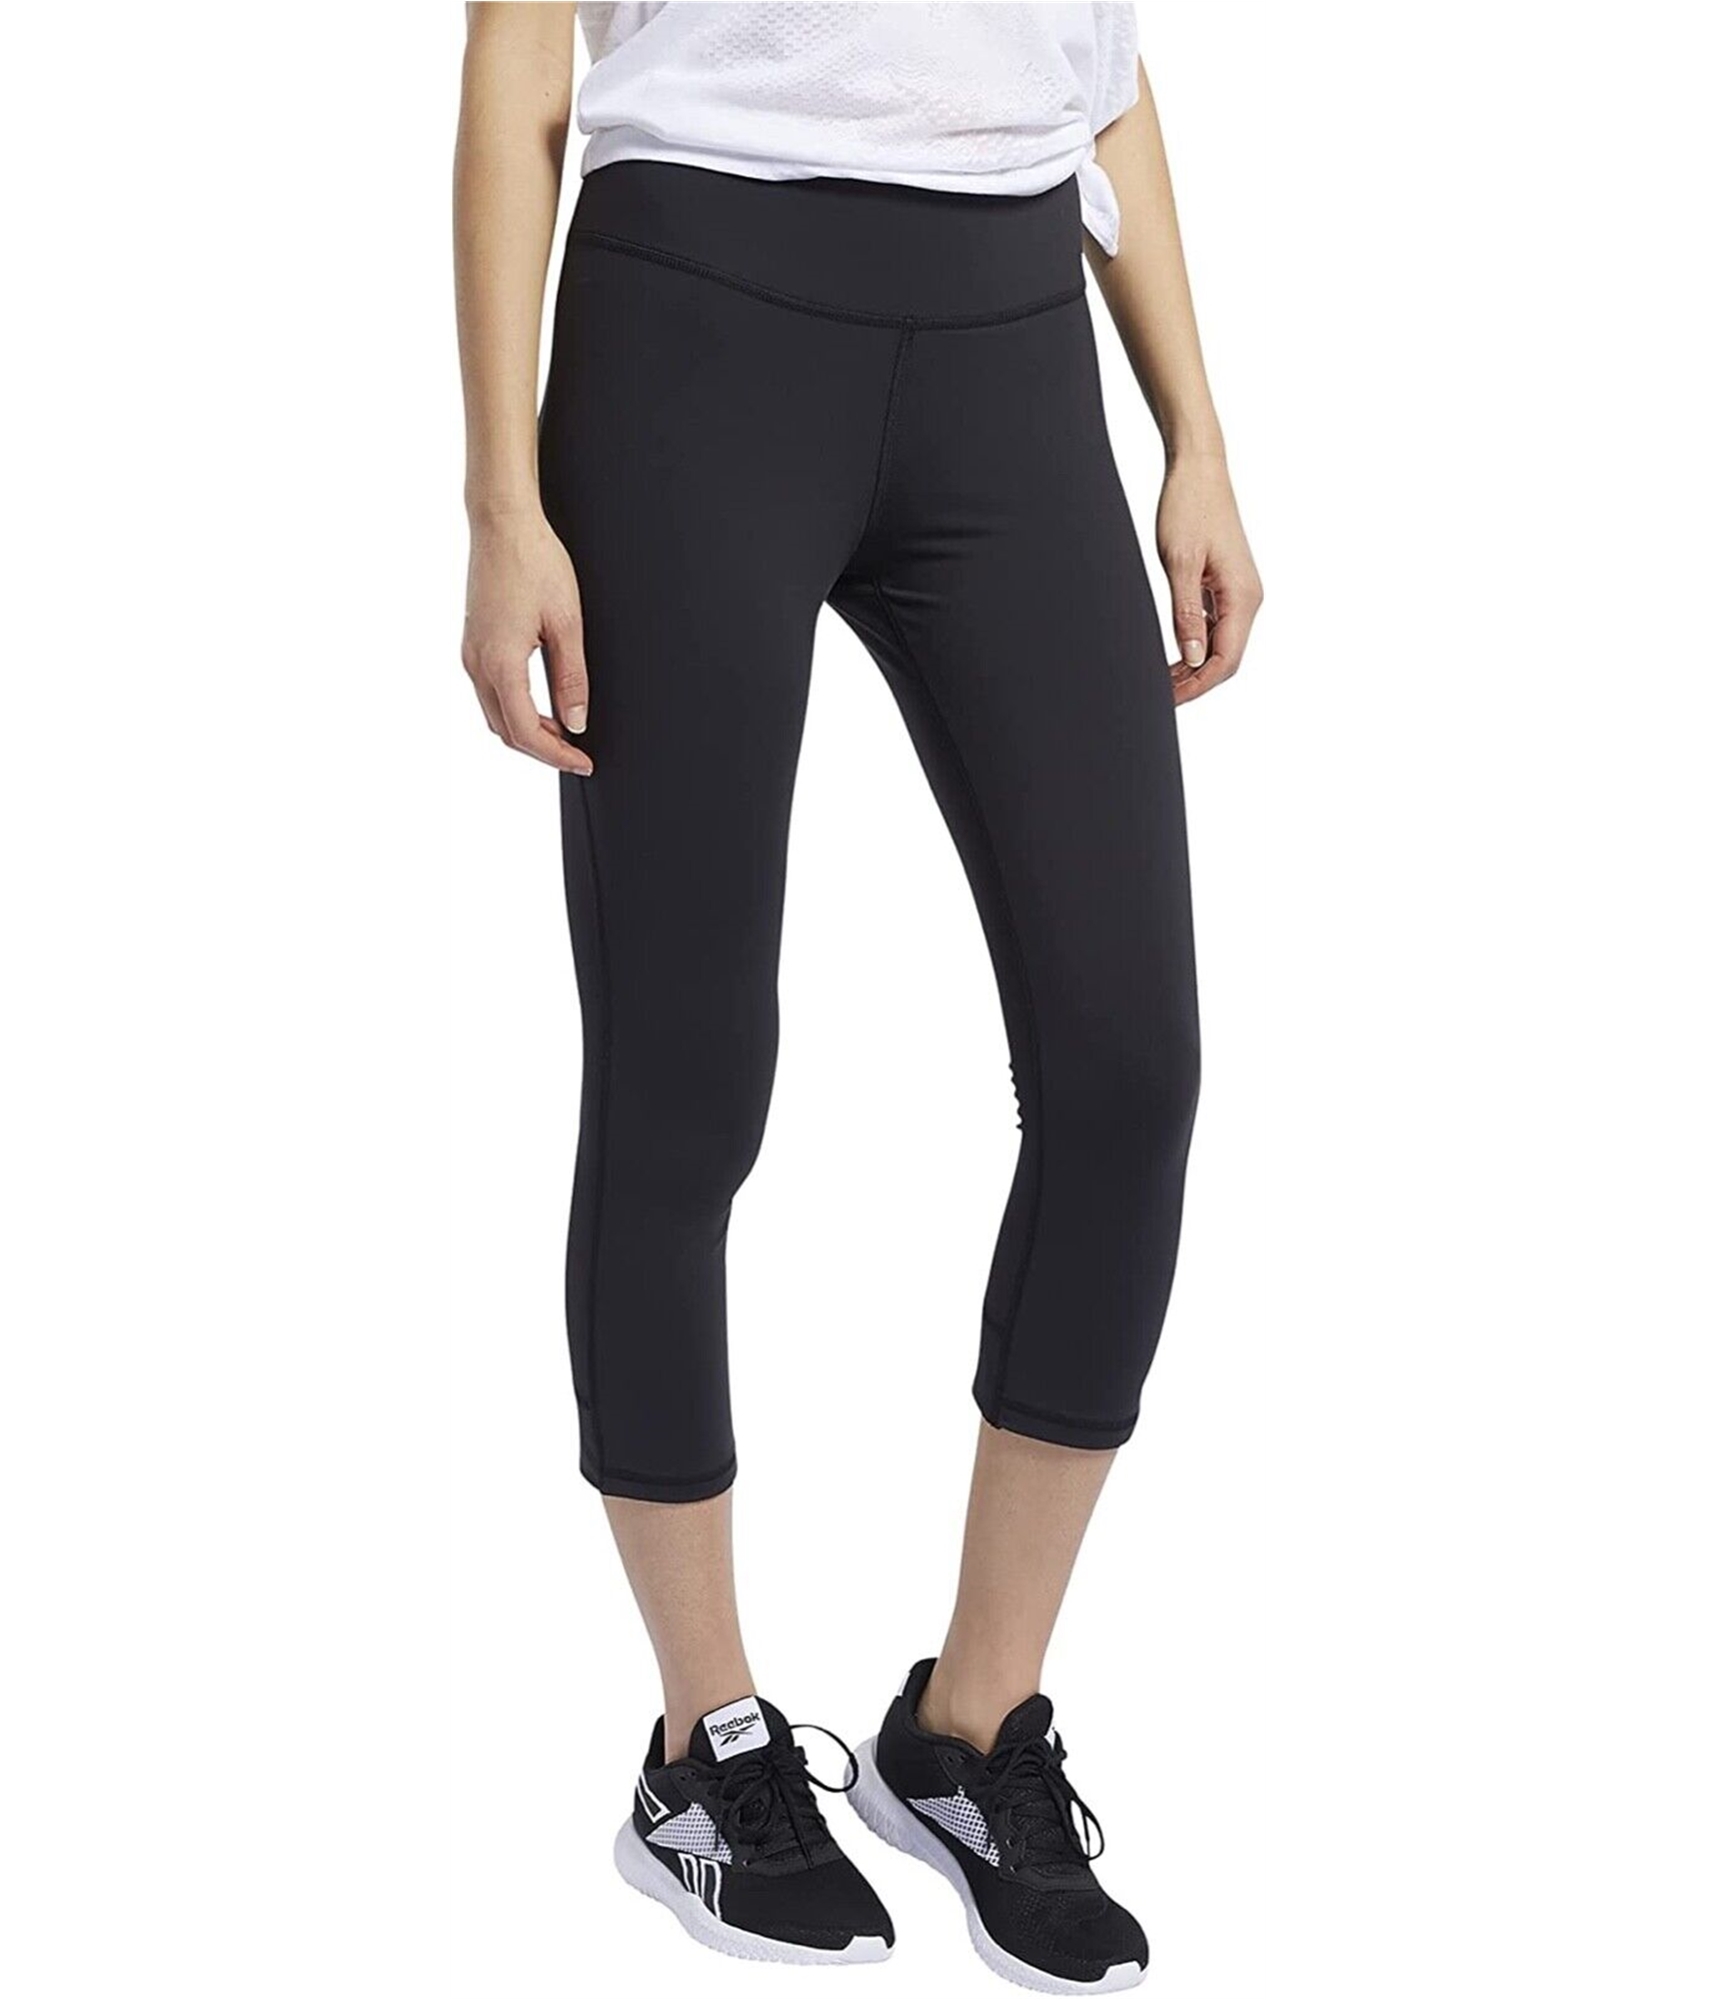 Nike, Pants & Jumpsuits, Nike Drifit Grey Capri Leggings Great Condition  Womens Size Medium